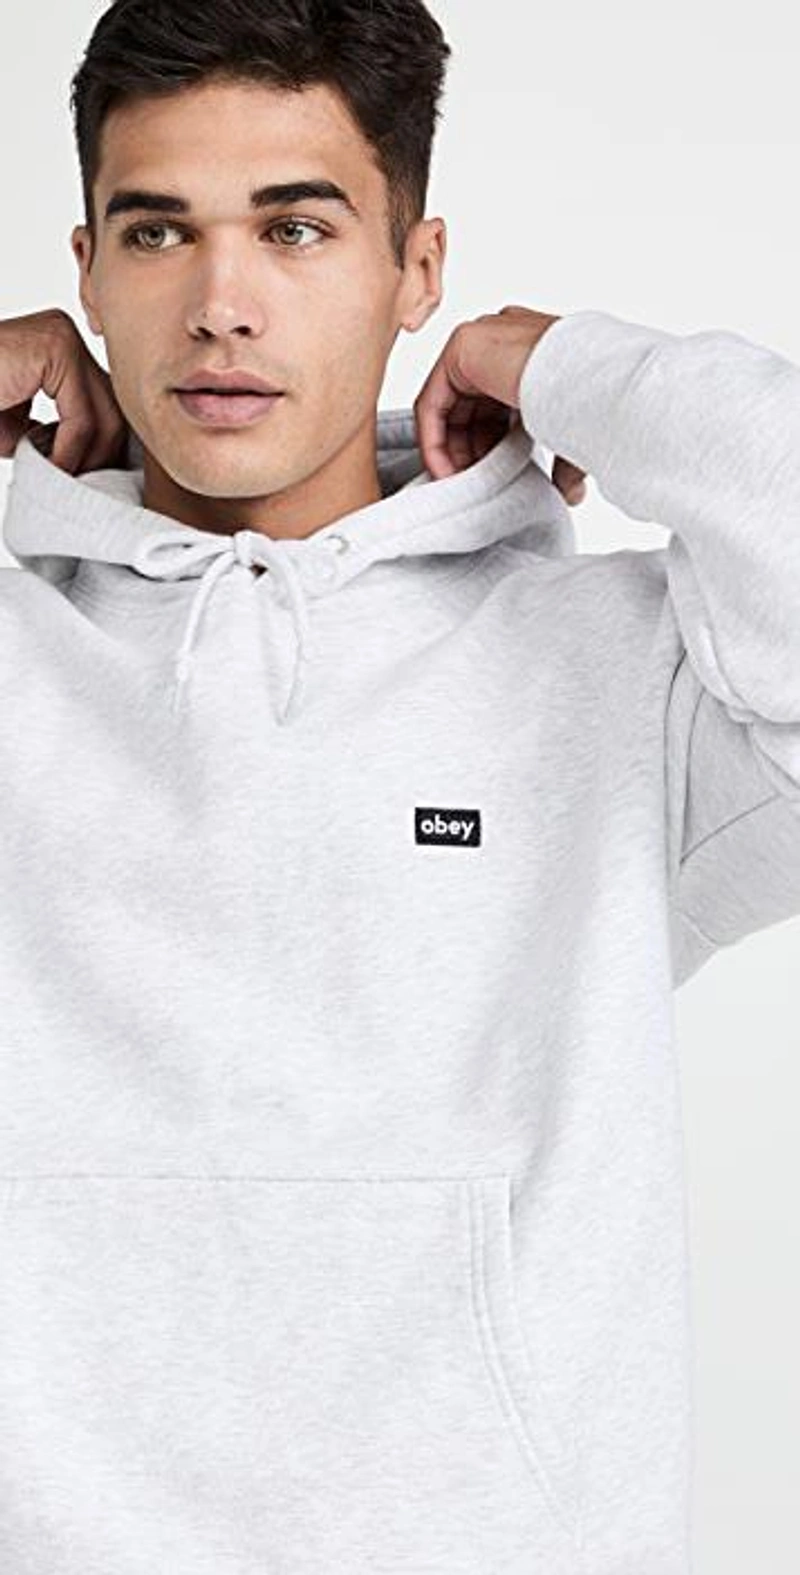 shopbop.com's Posts | 搭配: Obey Mini Box Logo Hoodie - Ash；Calvin Klein Underwear Short Sleeve Crew Neck 2pk In White；New Balance 574 Sneakers In Neutral Multi